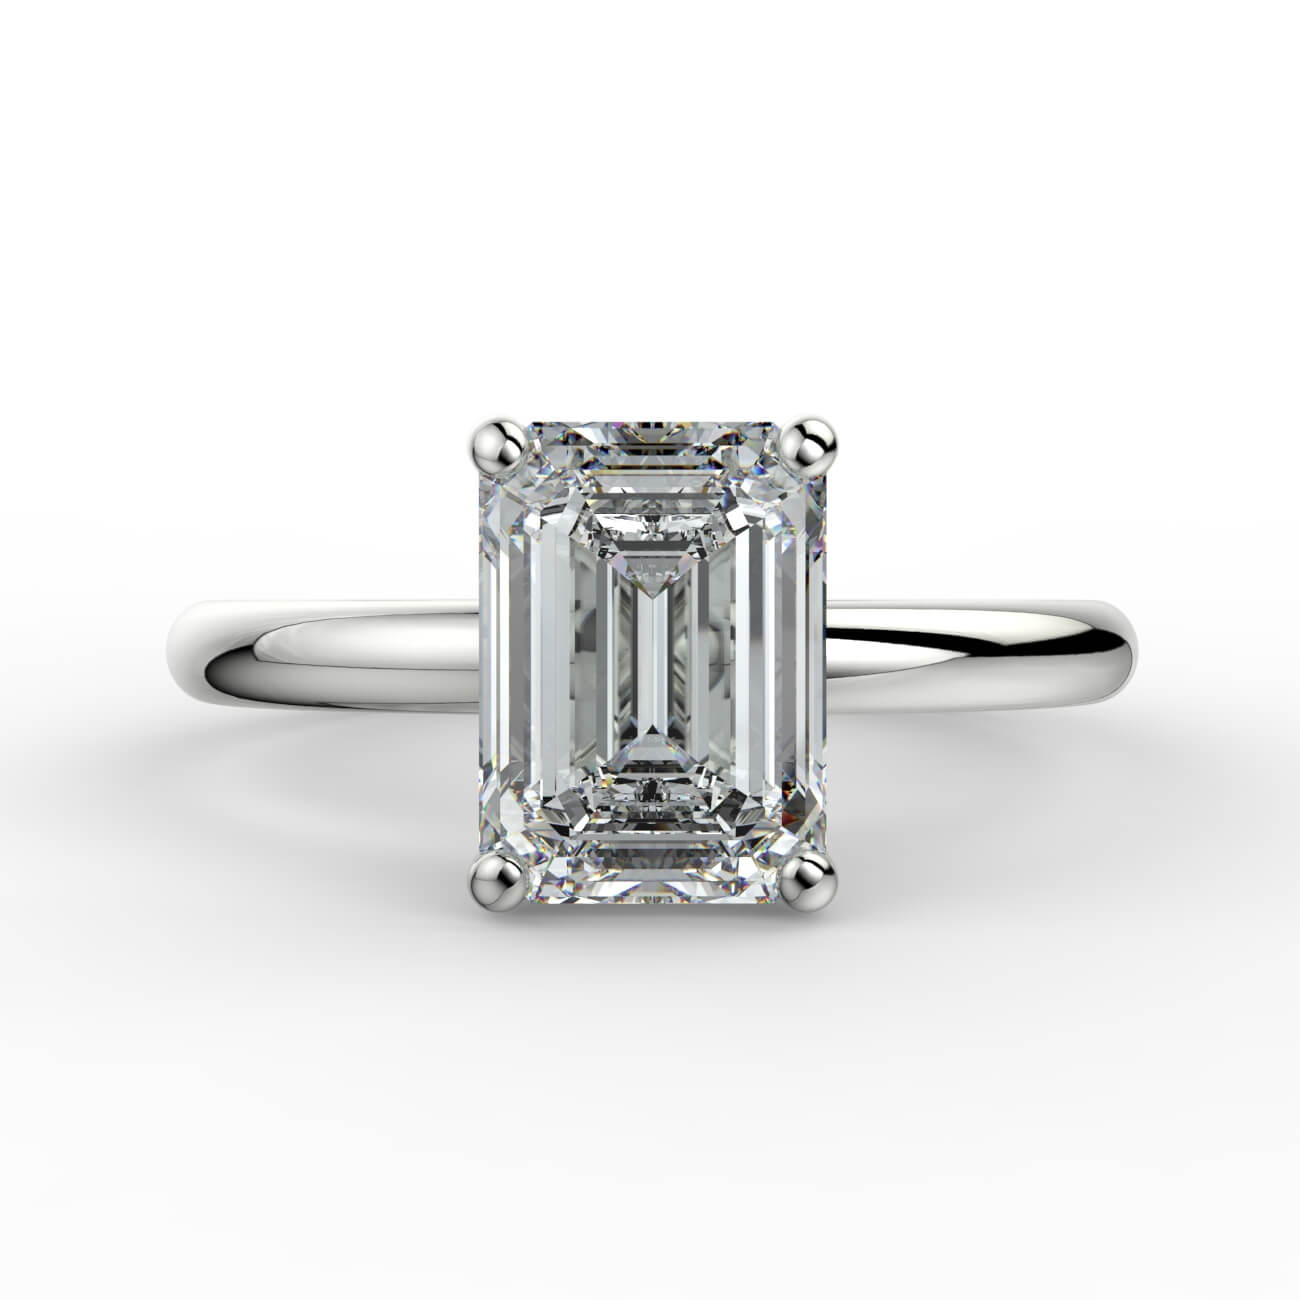 Solitaire emerald cut diamond engagement ring in white gold – Australian Diamond Network